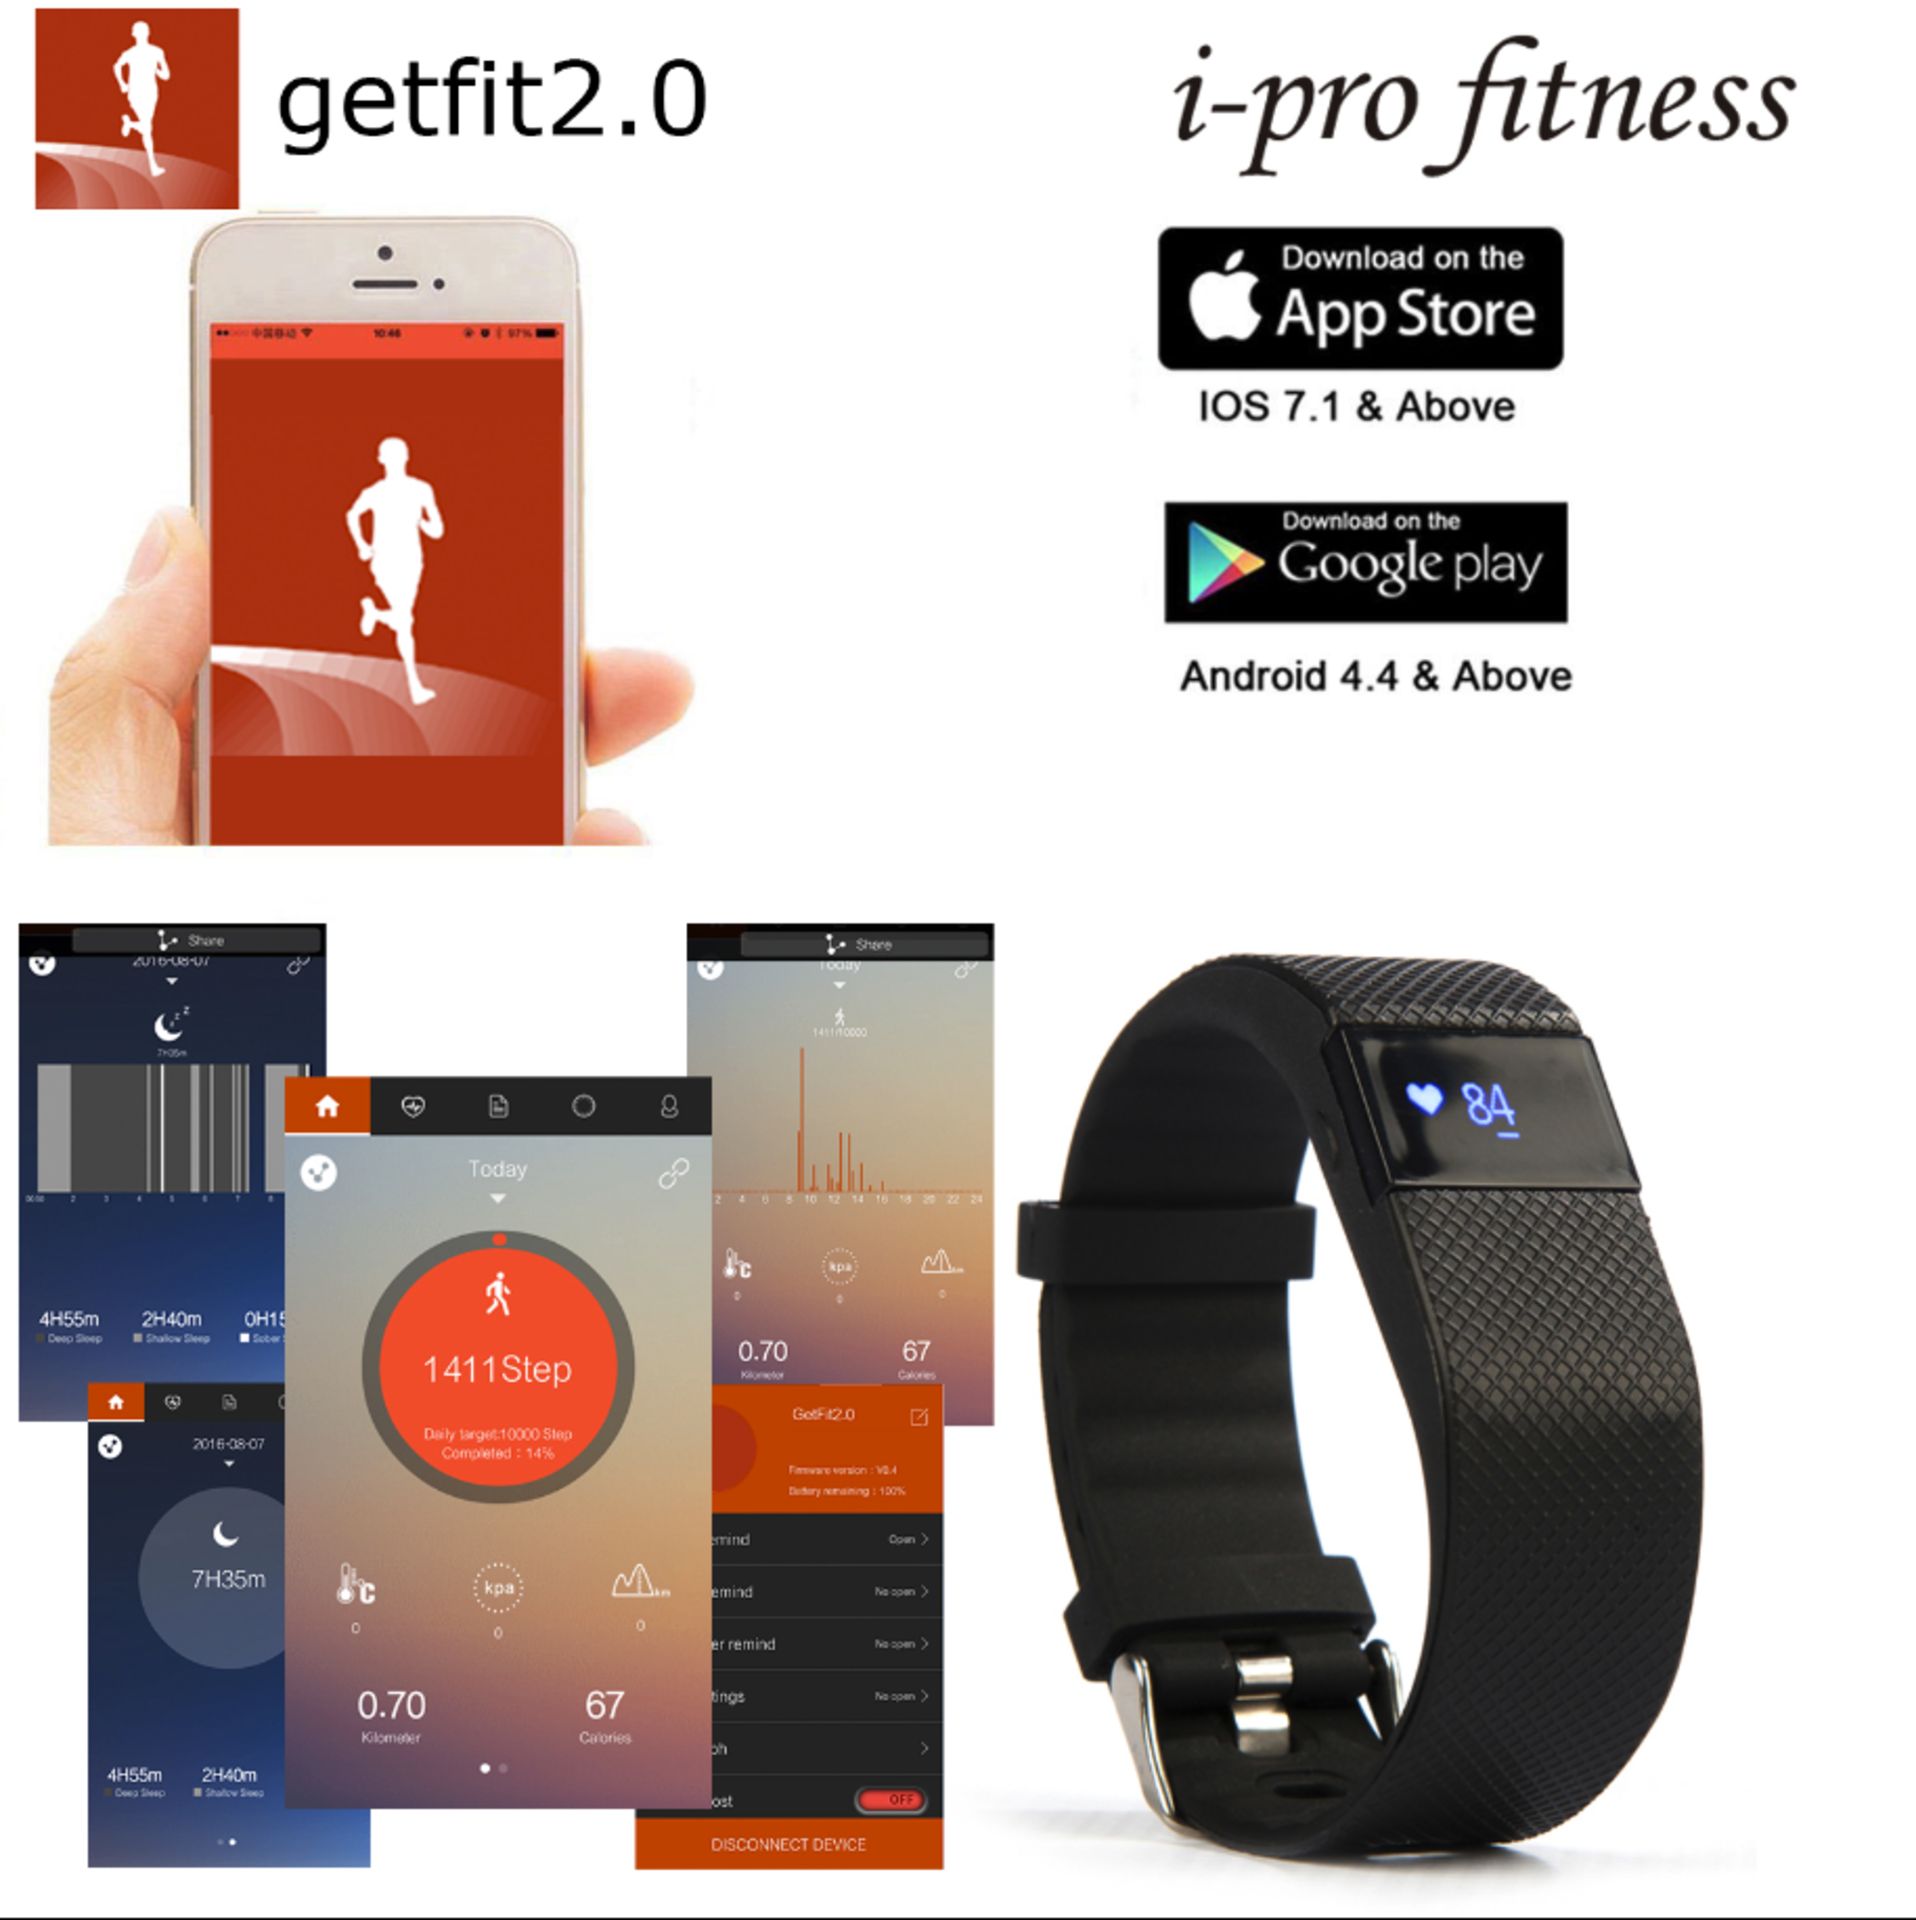 ***Trade lot 50 x Units Fitness Tracker i-pro fitness, Bluetooth 4.0 Sports Smart Bracelet*** - Image 5 of 8